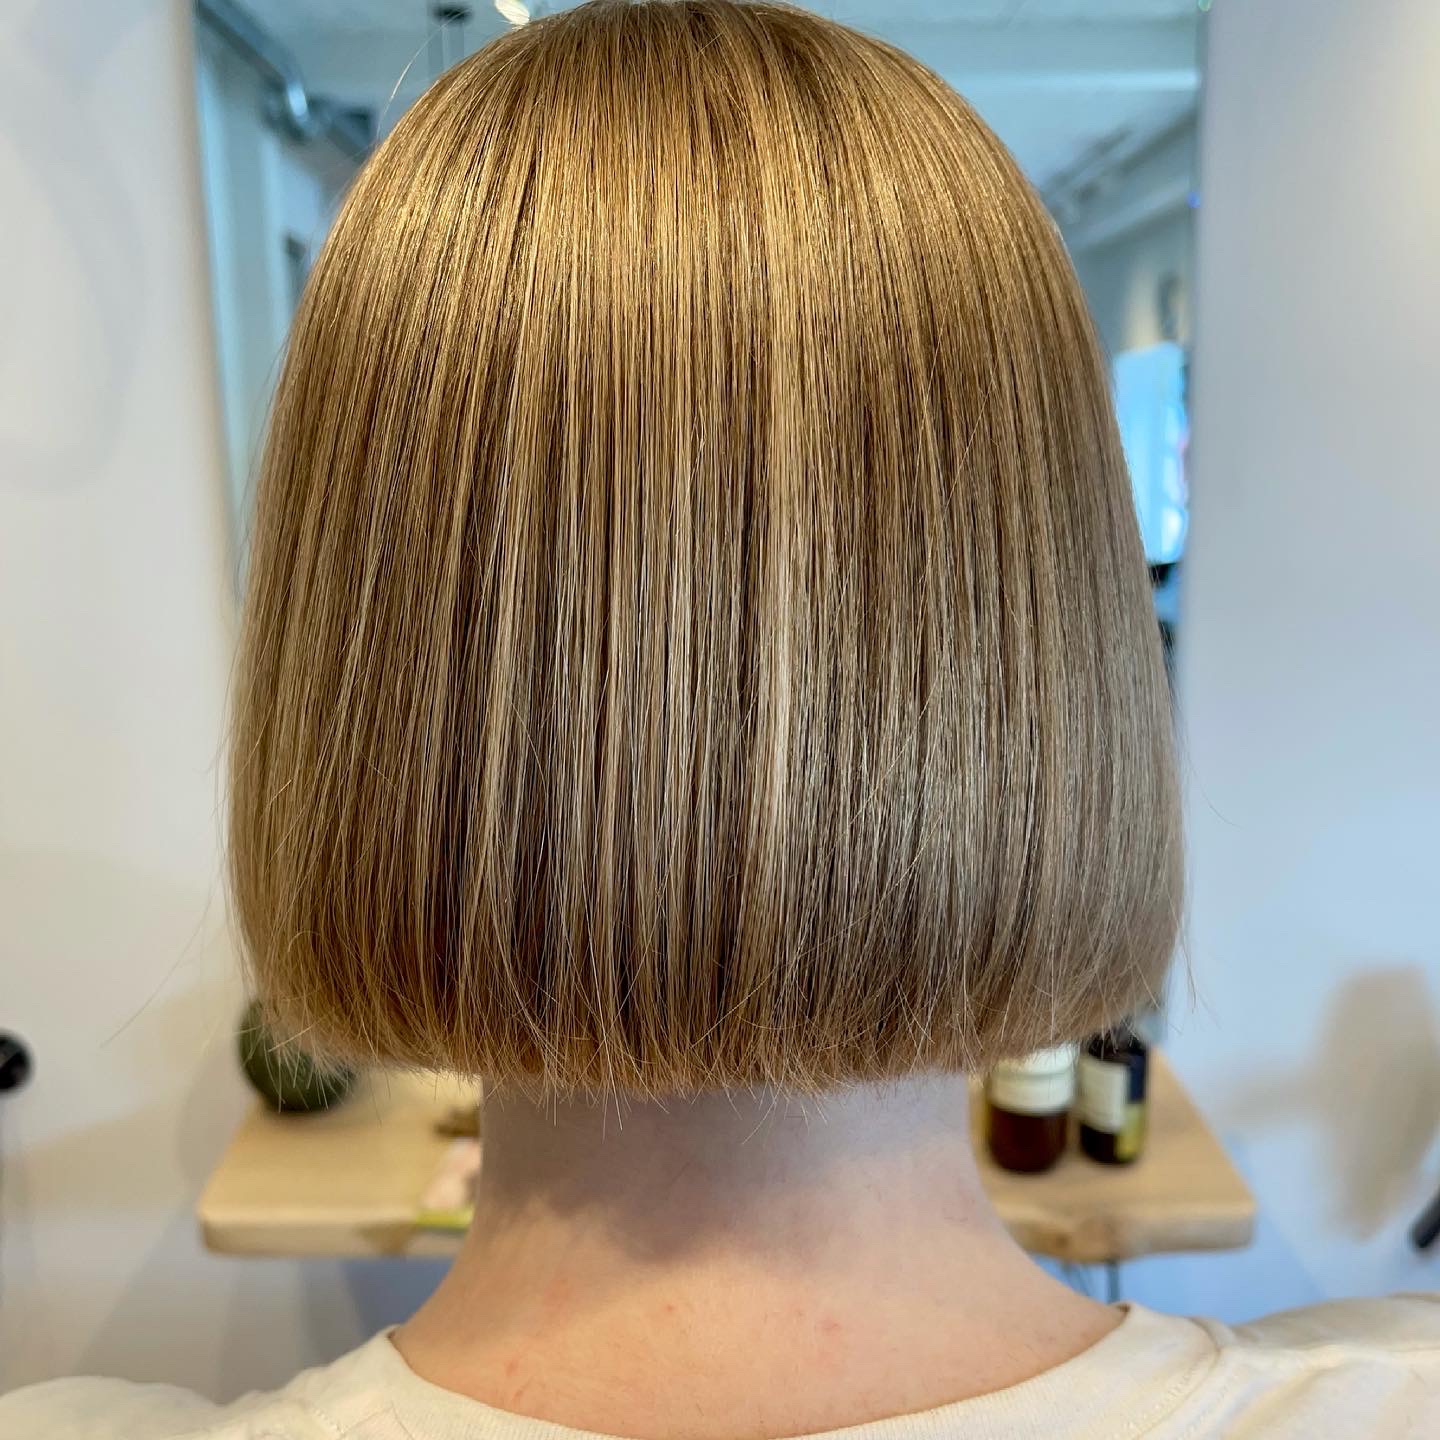 Mange mennesker i Danmark 🇩🇰 donere deres hår til paryk .. · KLIPTONE -  SKIVE / FRISØR OG PARYKHUS - VESTERGADE 16B - TELE.22 28 11 98